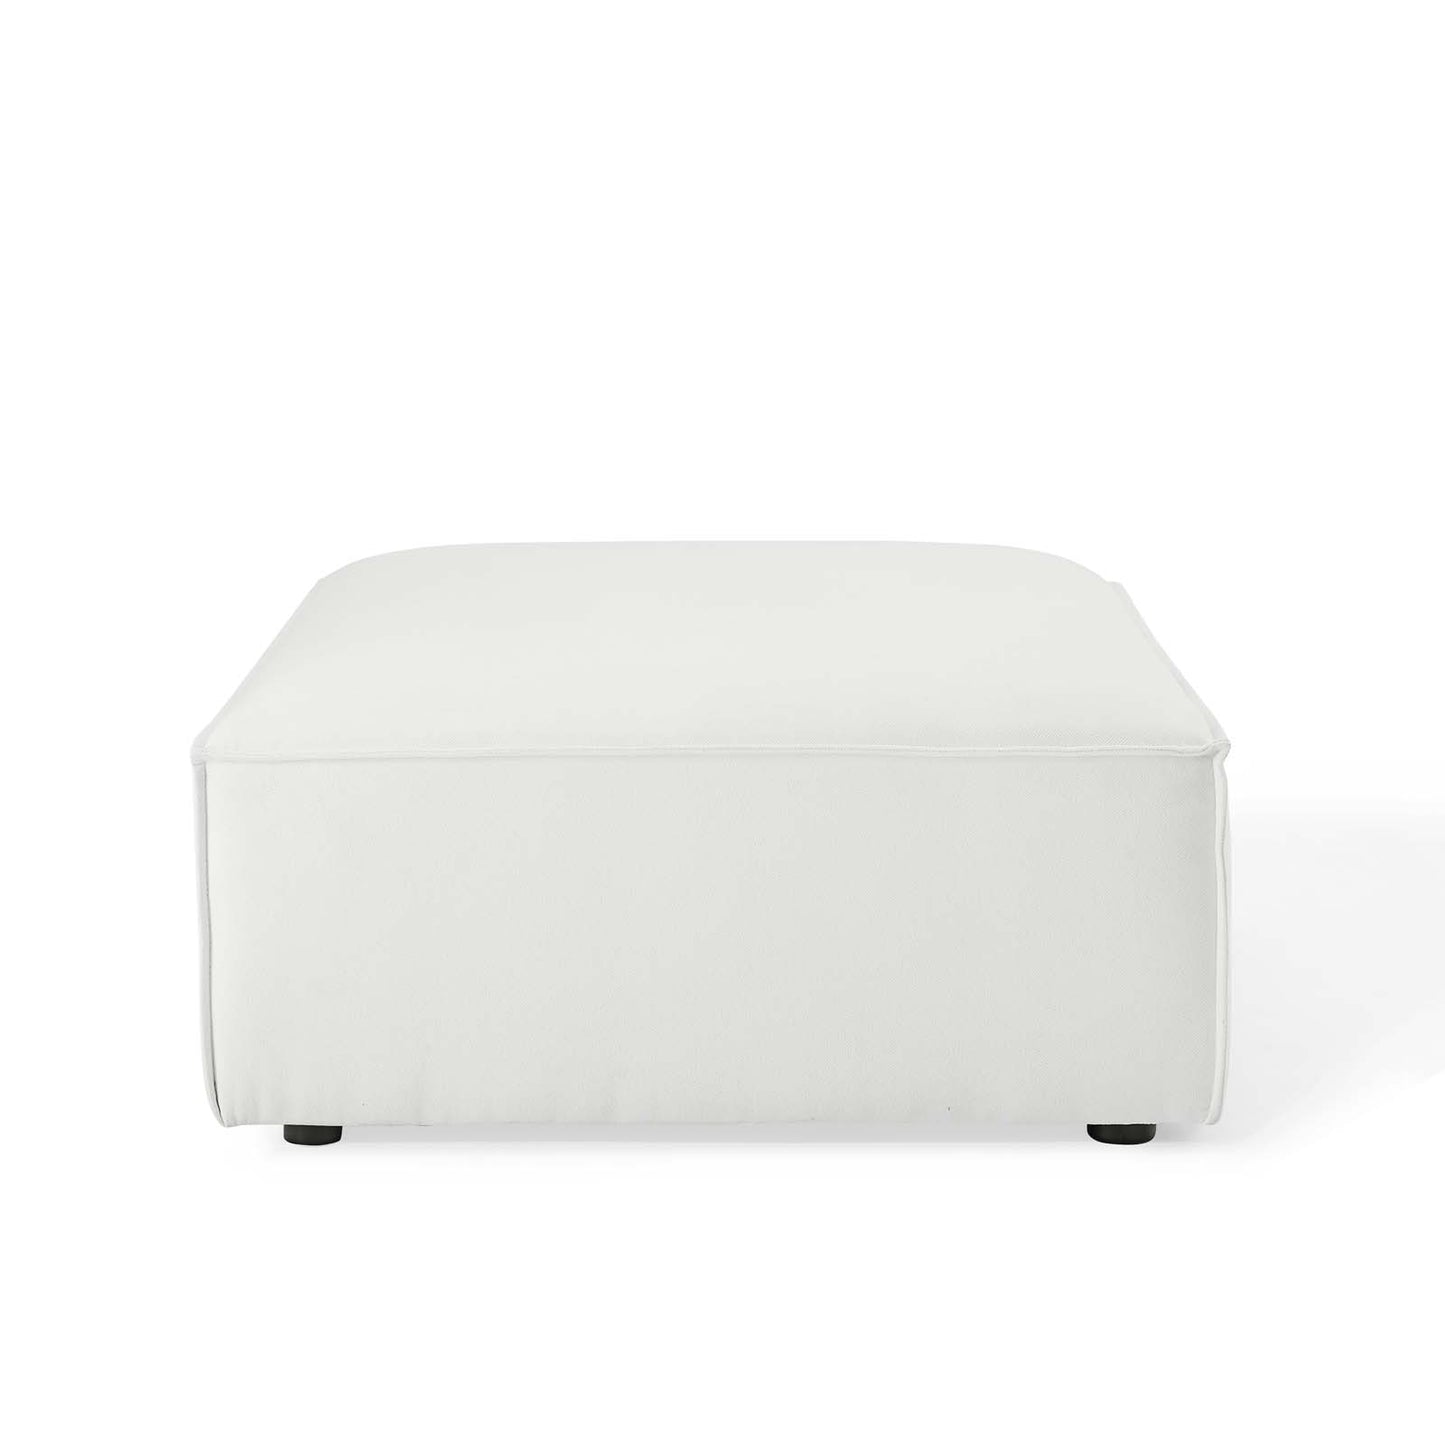 Restore 5-Piece Sectional Sofa White EEI-4115-WHI